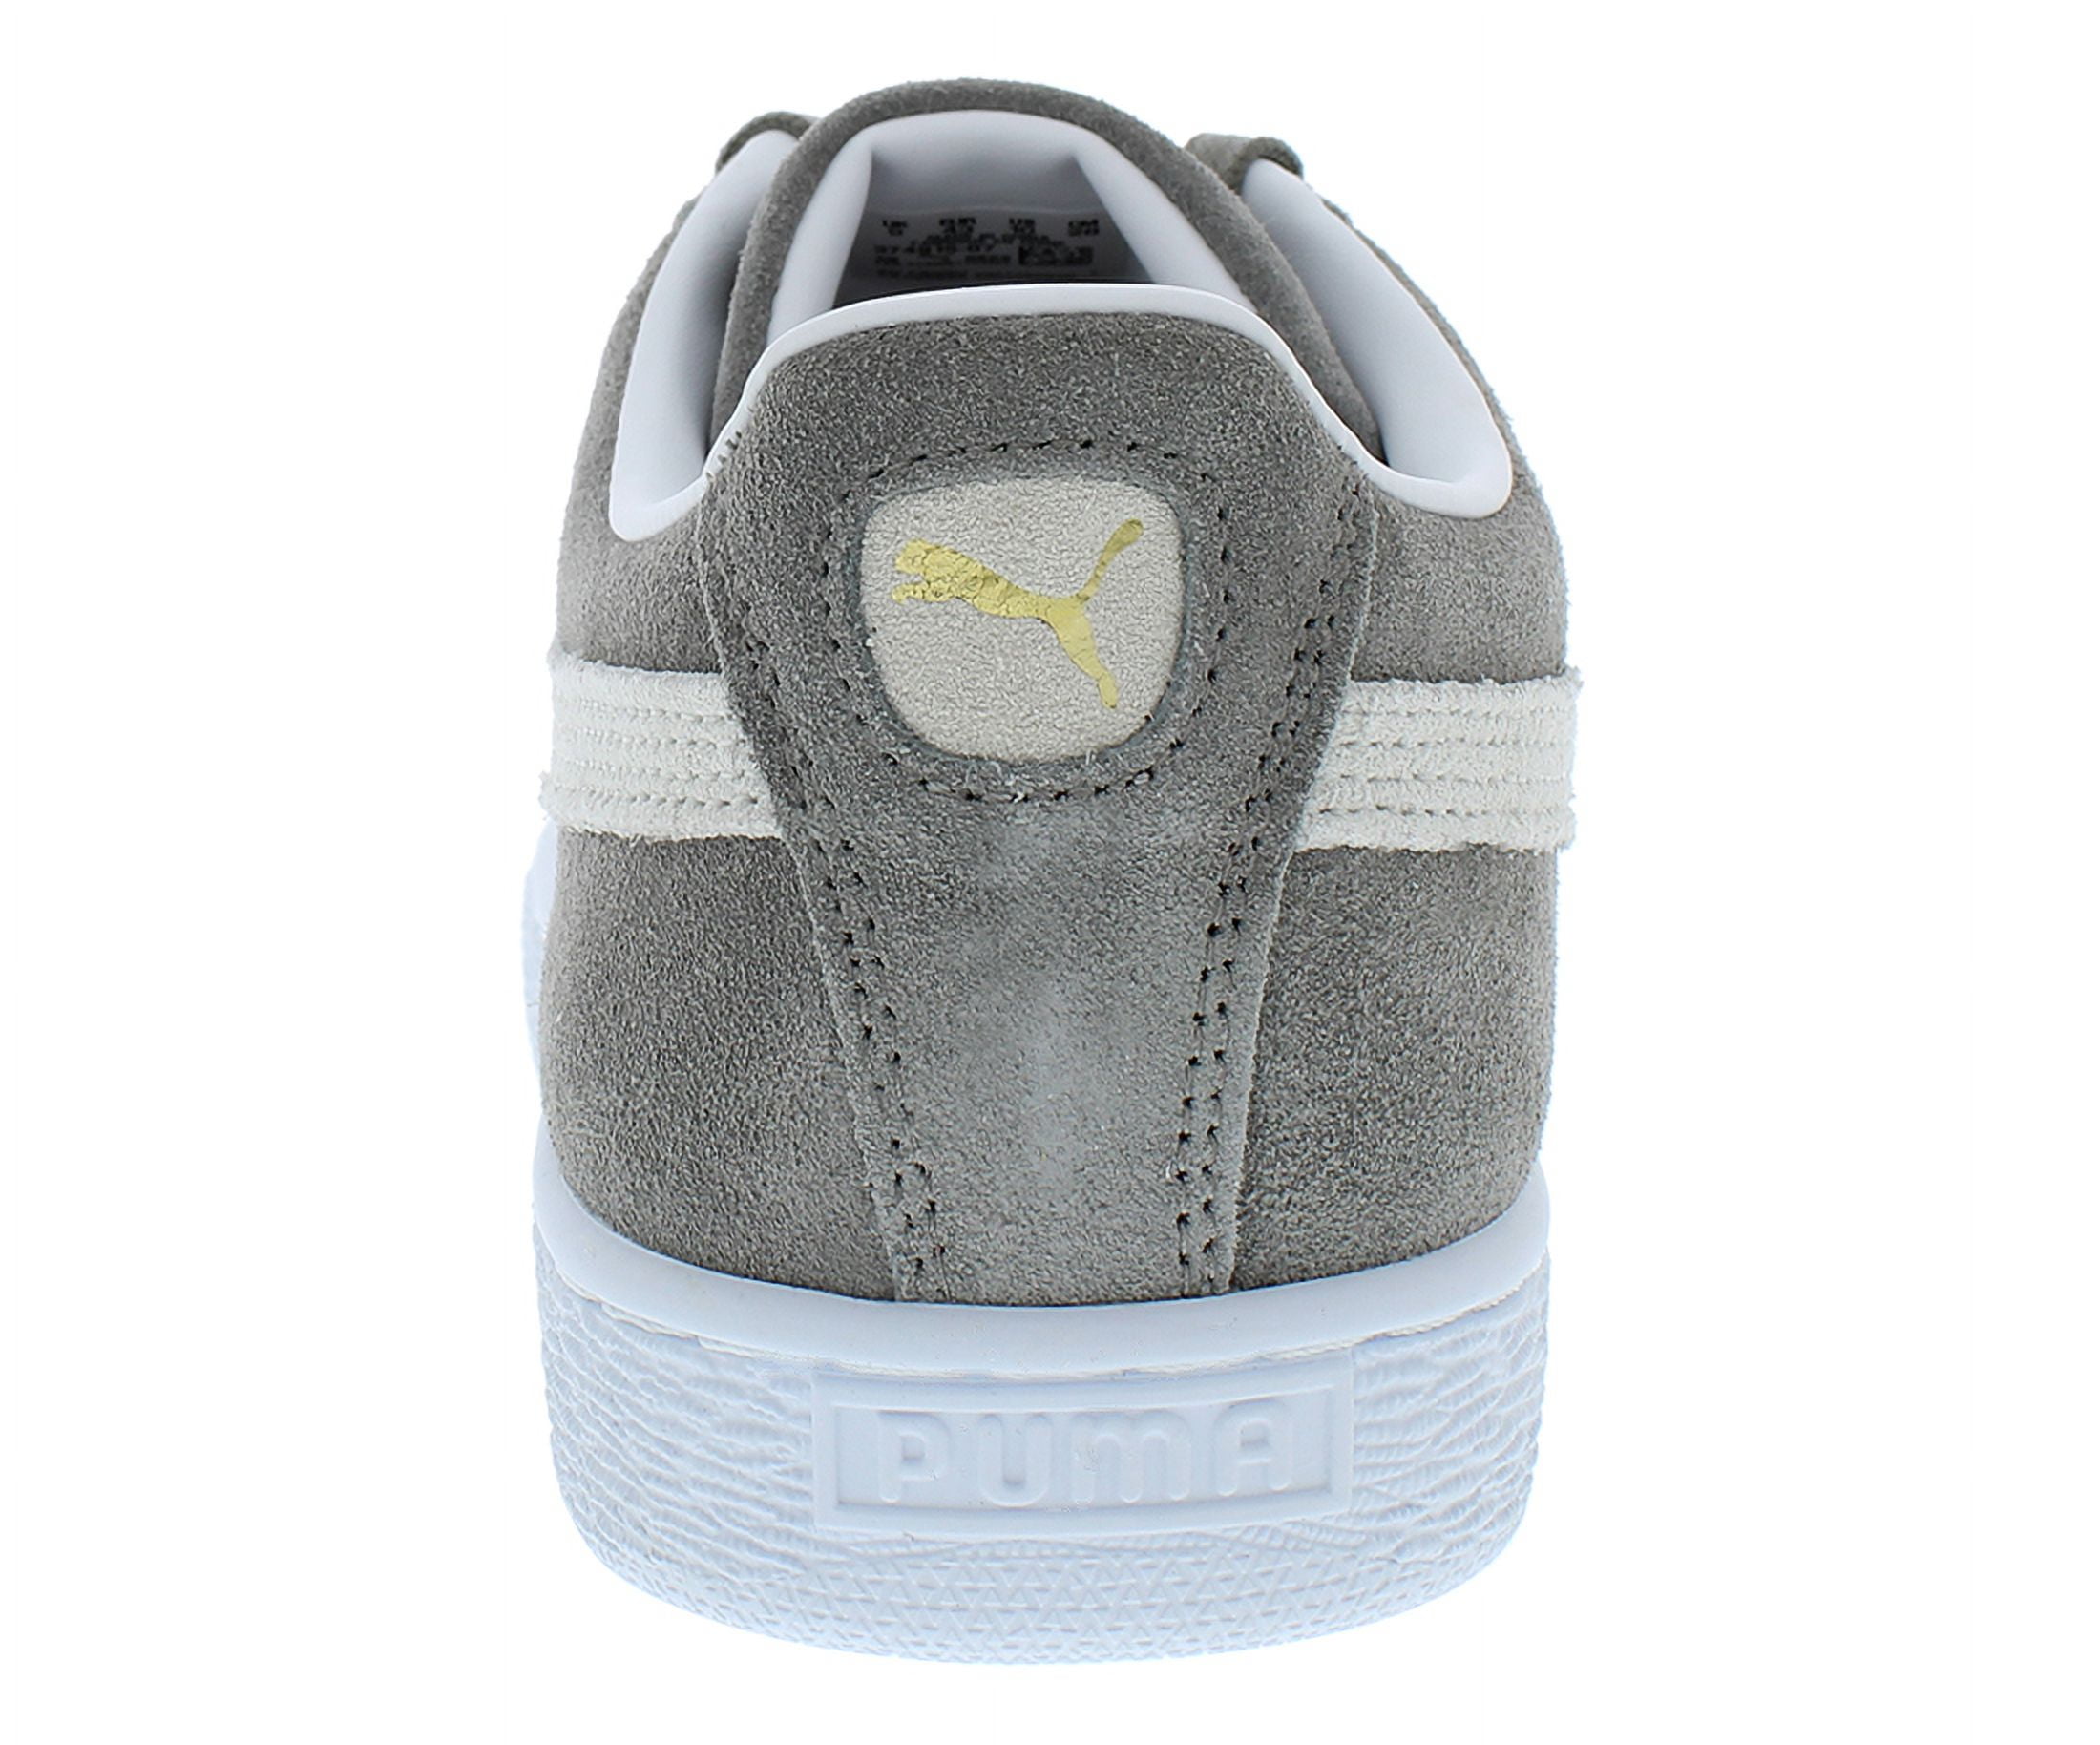 Puma Suede Classic XXI Mens Shoes Size 10.5, Color: Peacoat/Puma White 